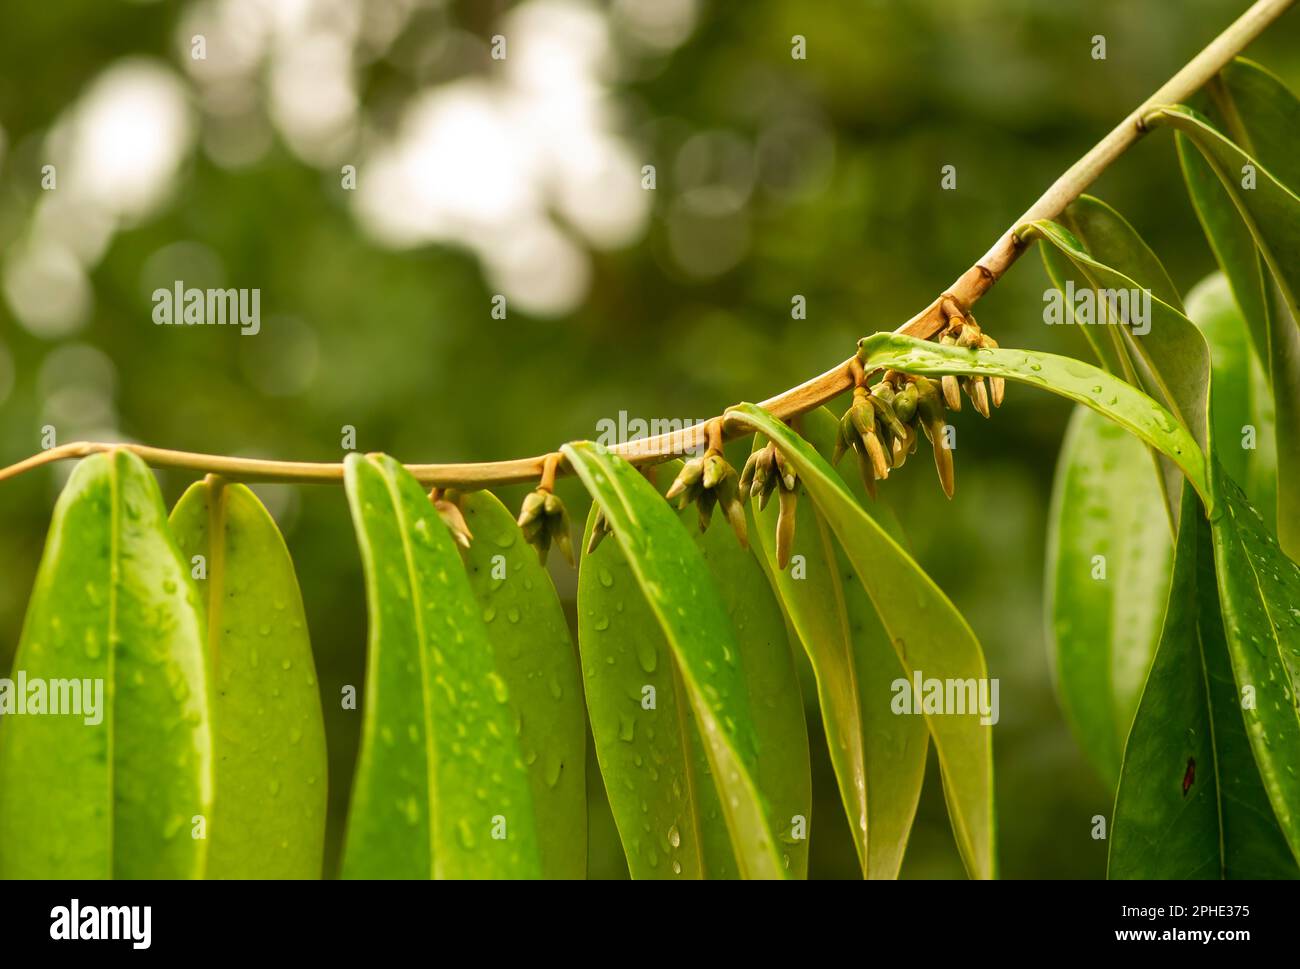 Indonesian dark wood, Ebony (Diospyros celebica) green leaves and flowers Stock Photo